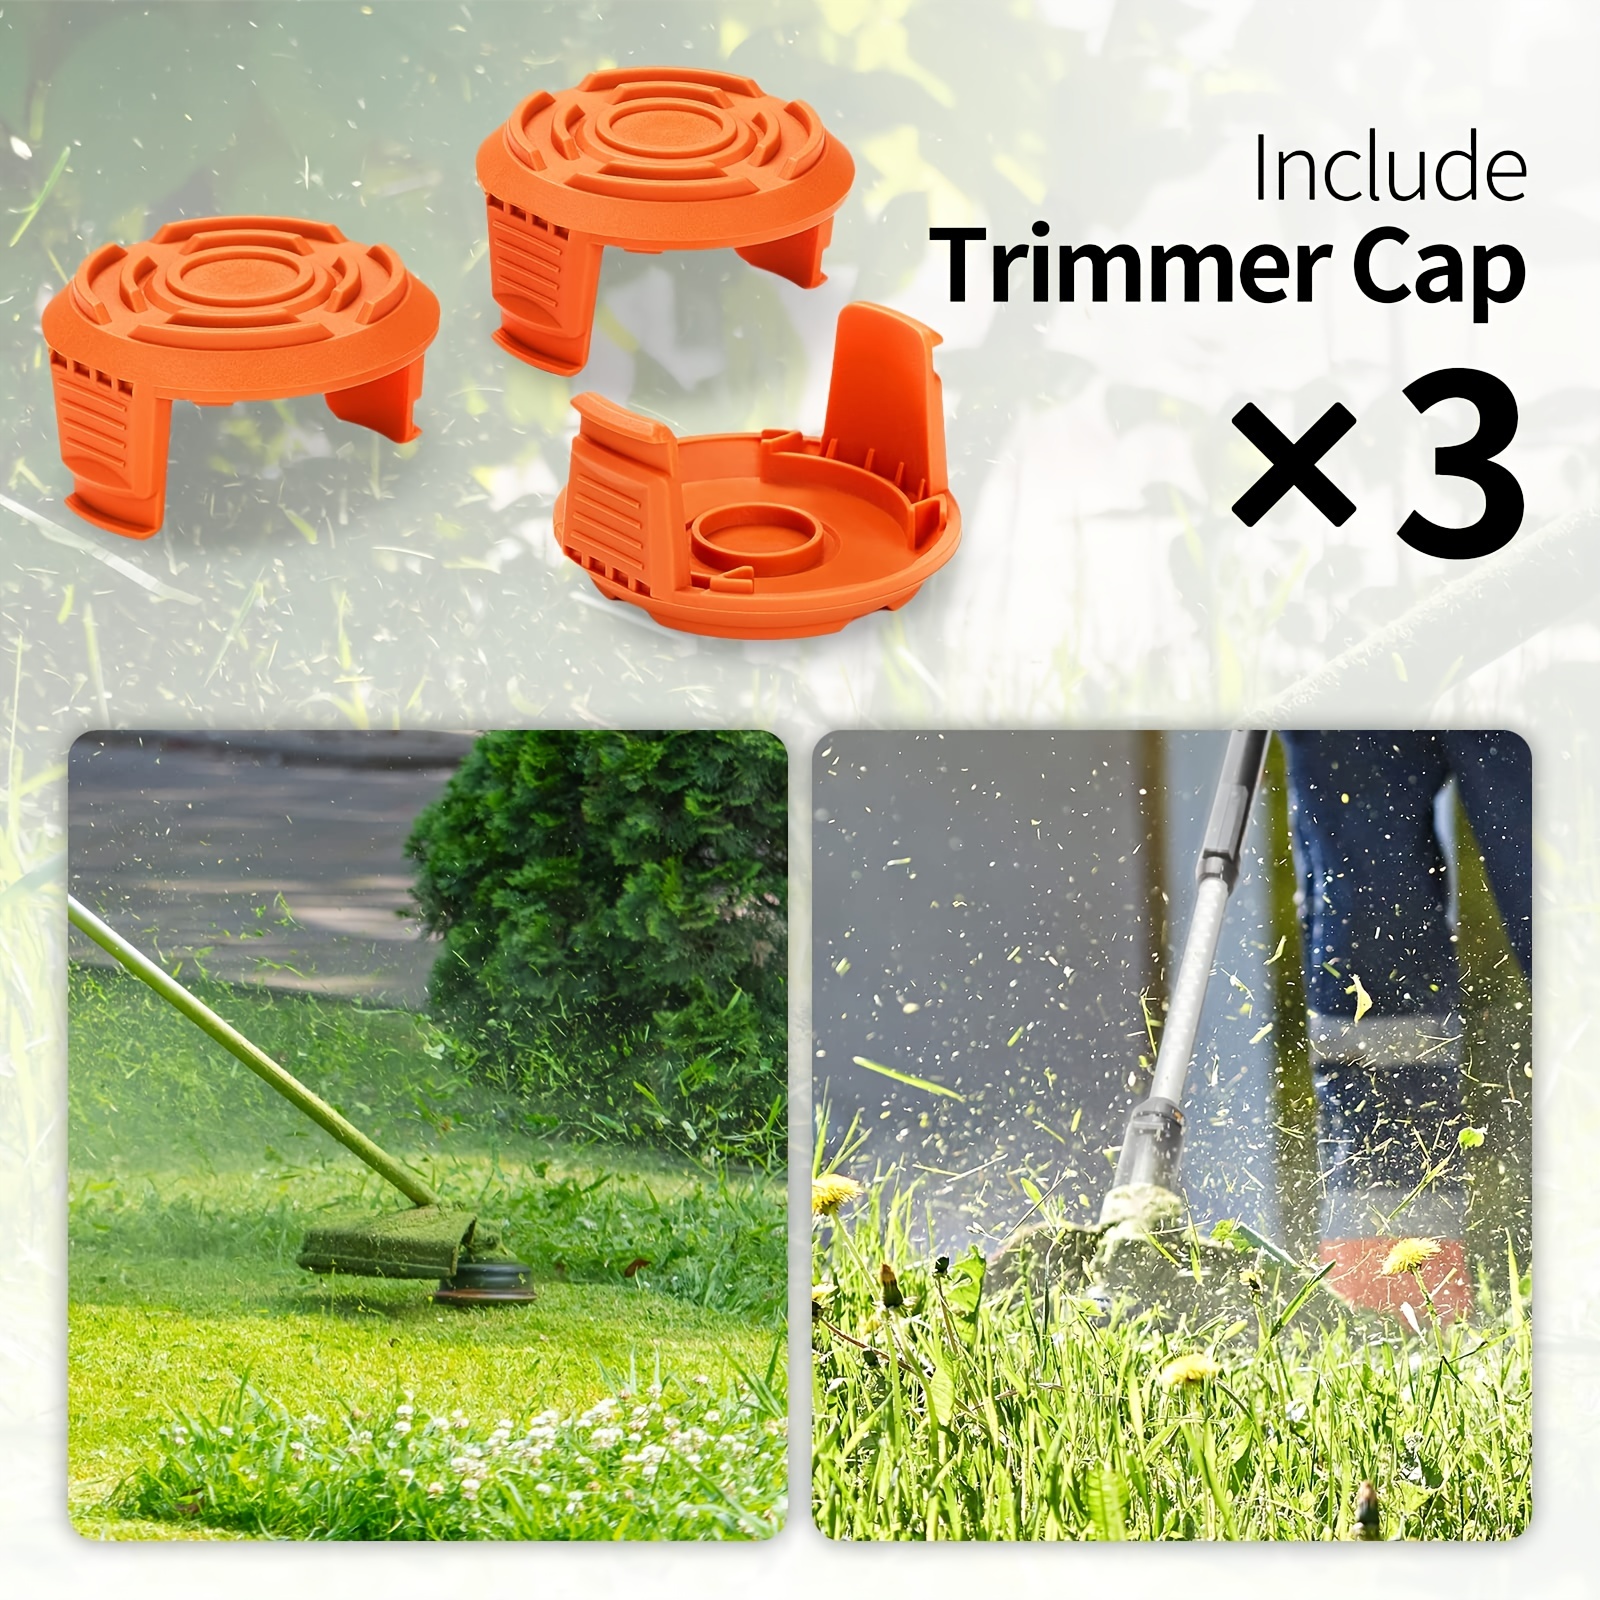 2PCS Trimmer Spool Cover Cap Lawn Mover Accessories Parkside